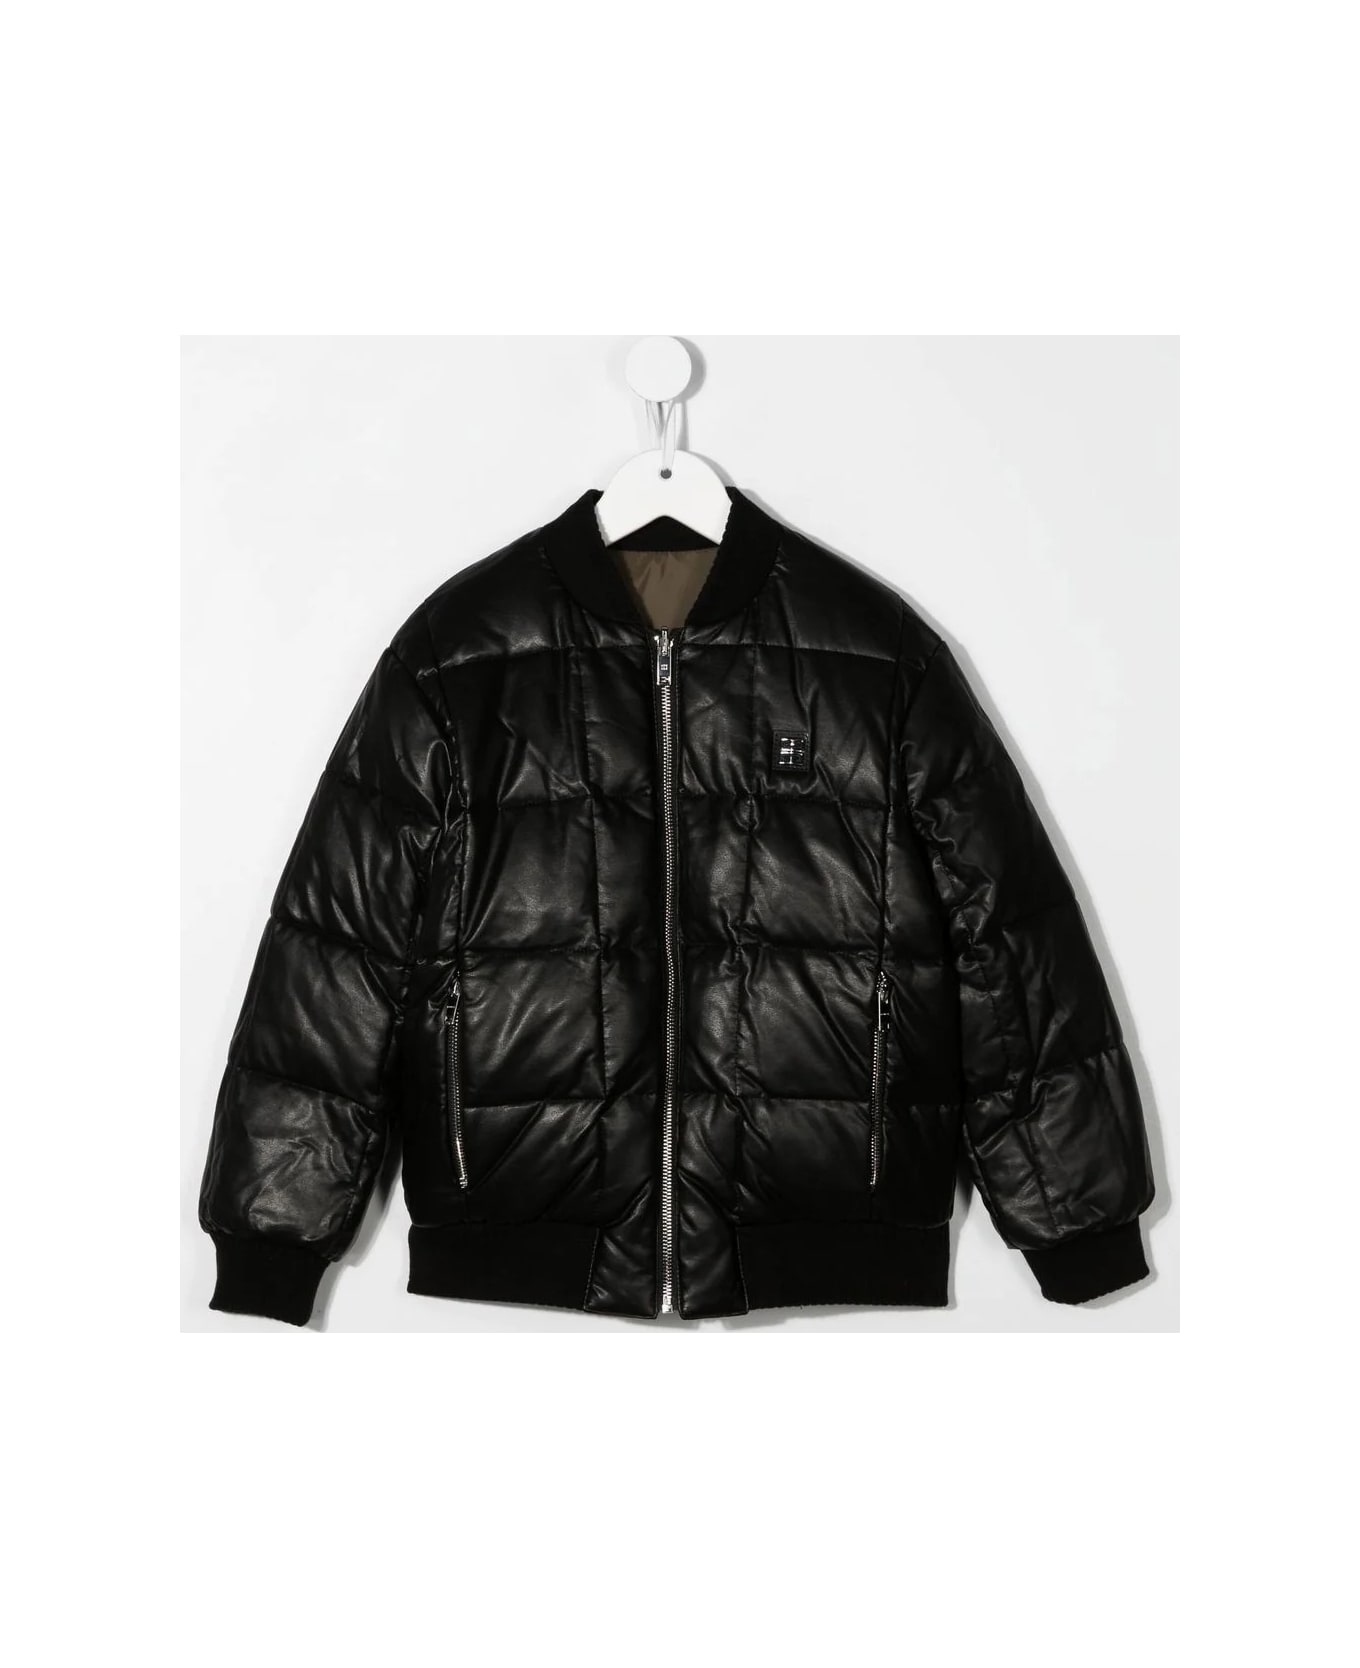 Givenchy Black And Khaki Reversible Down Jacket With Logo - Nero/kaki